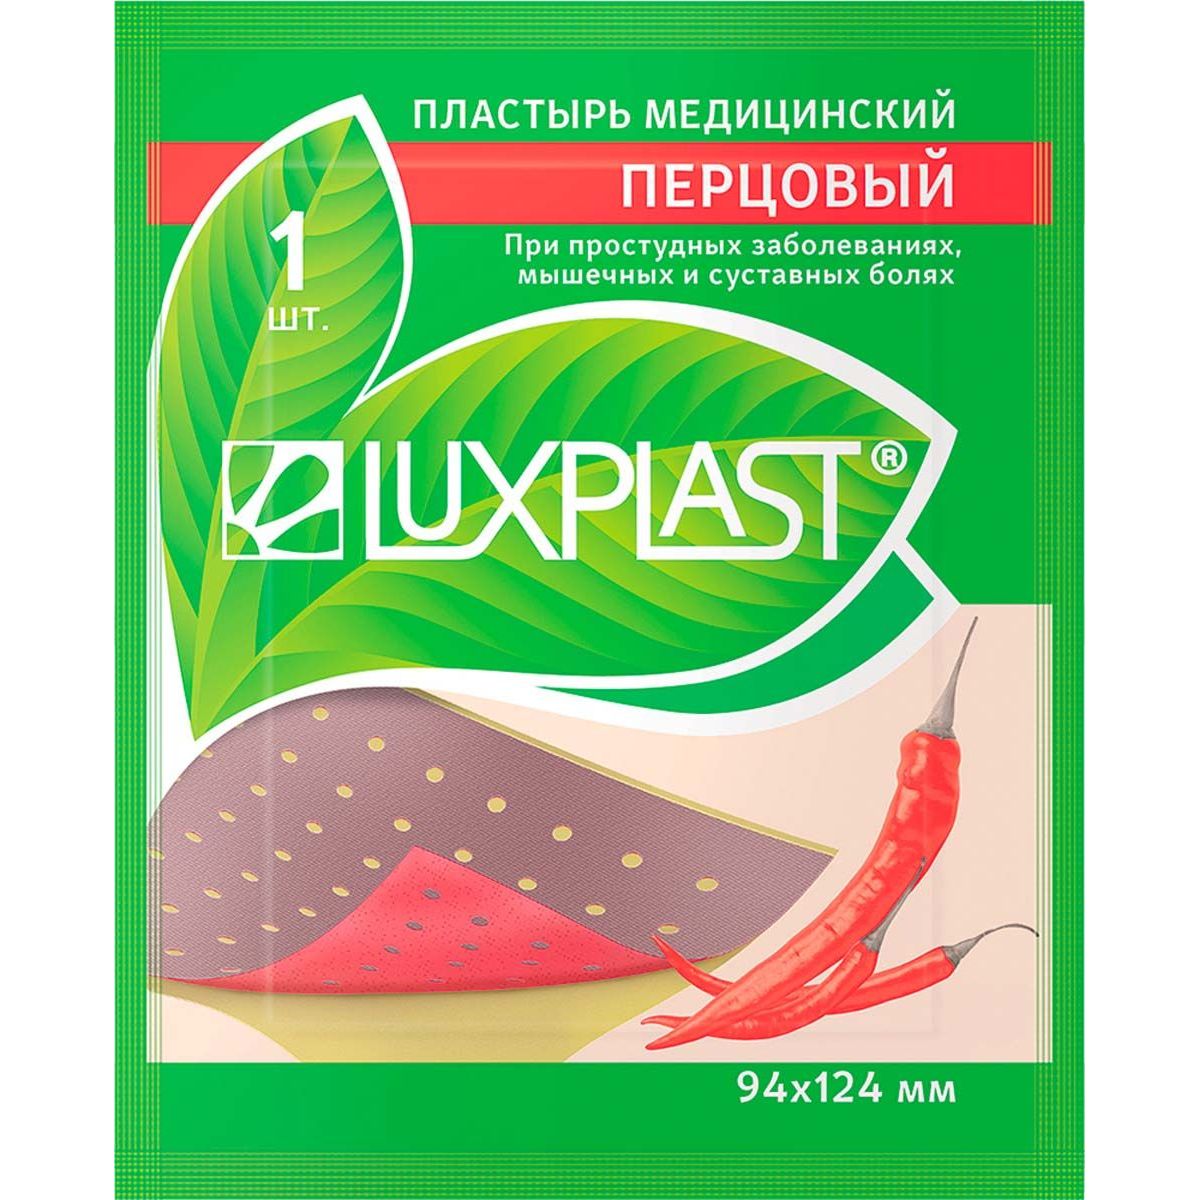 Пластырь перцовый Luxplast 1 шт